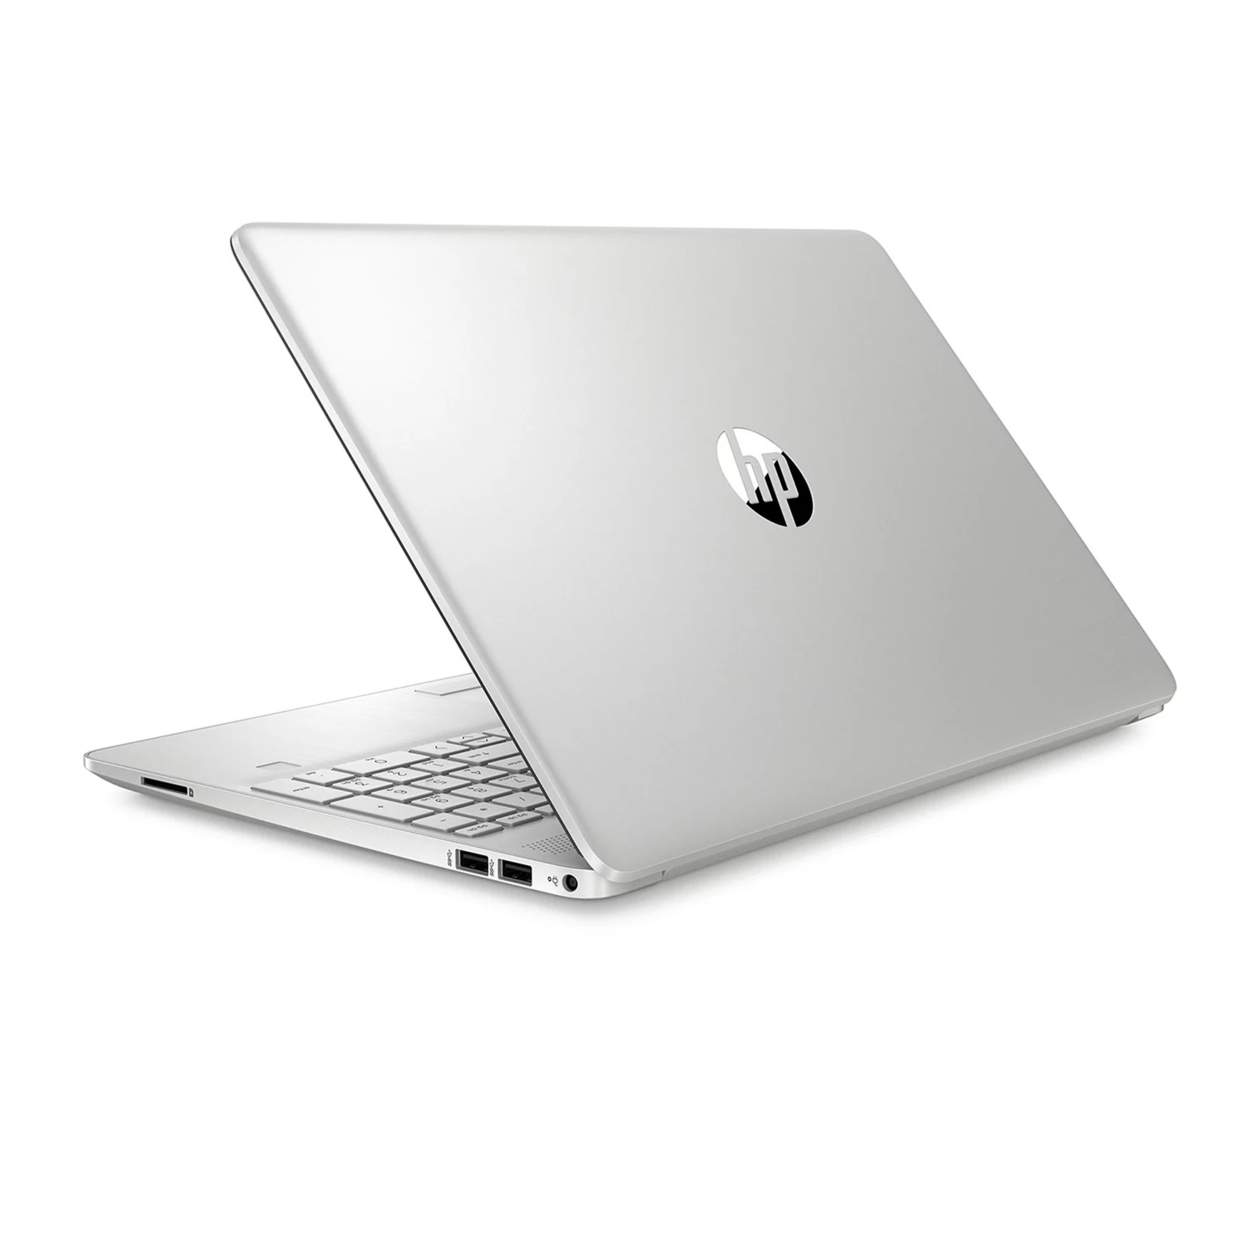 HP - 15.6" Full HD (1920 x 1080) Laptop - 11th Generation Intel Core i5-1135G7 - image 2 of 2